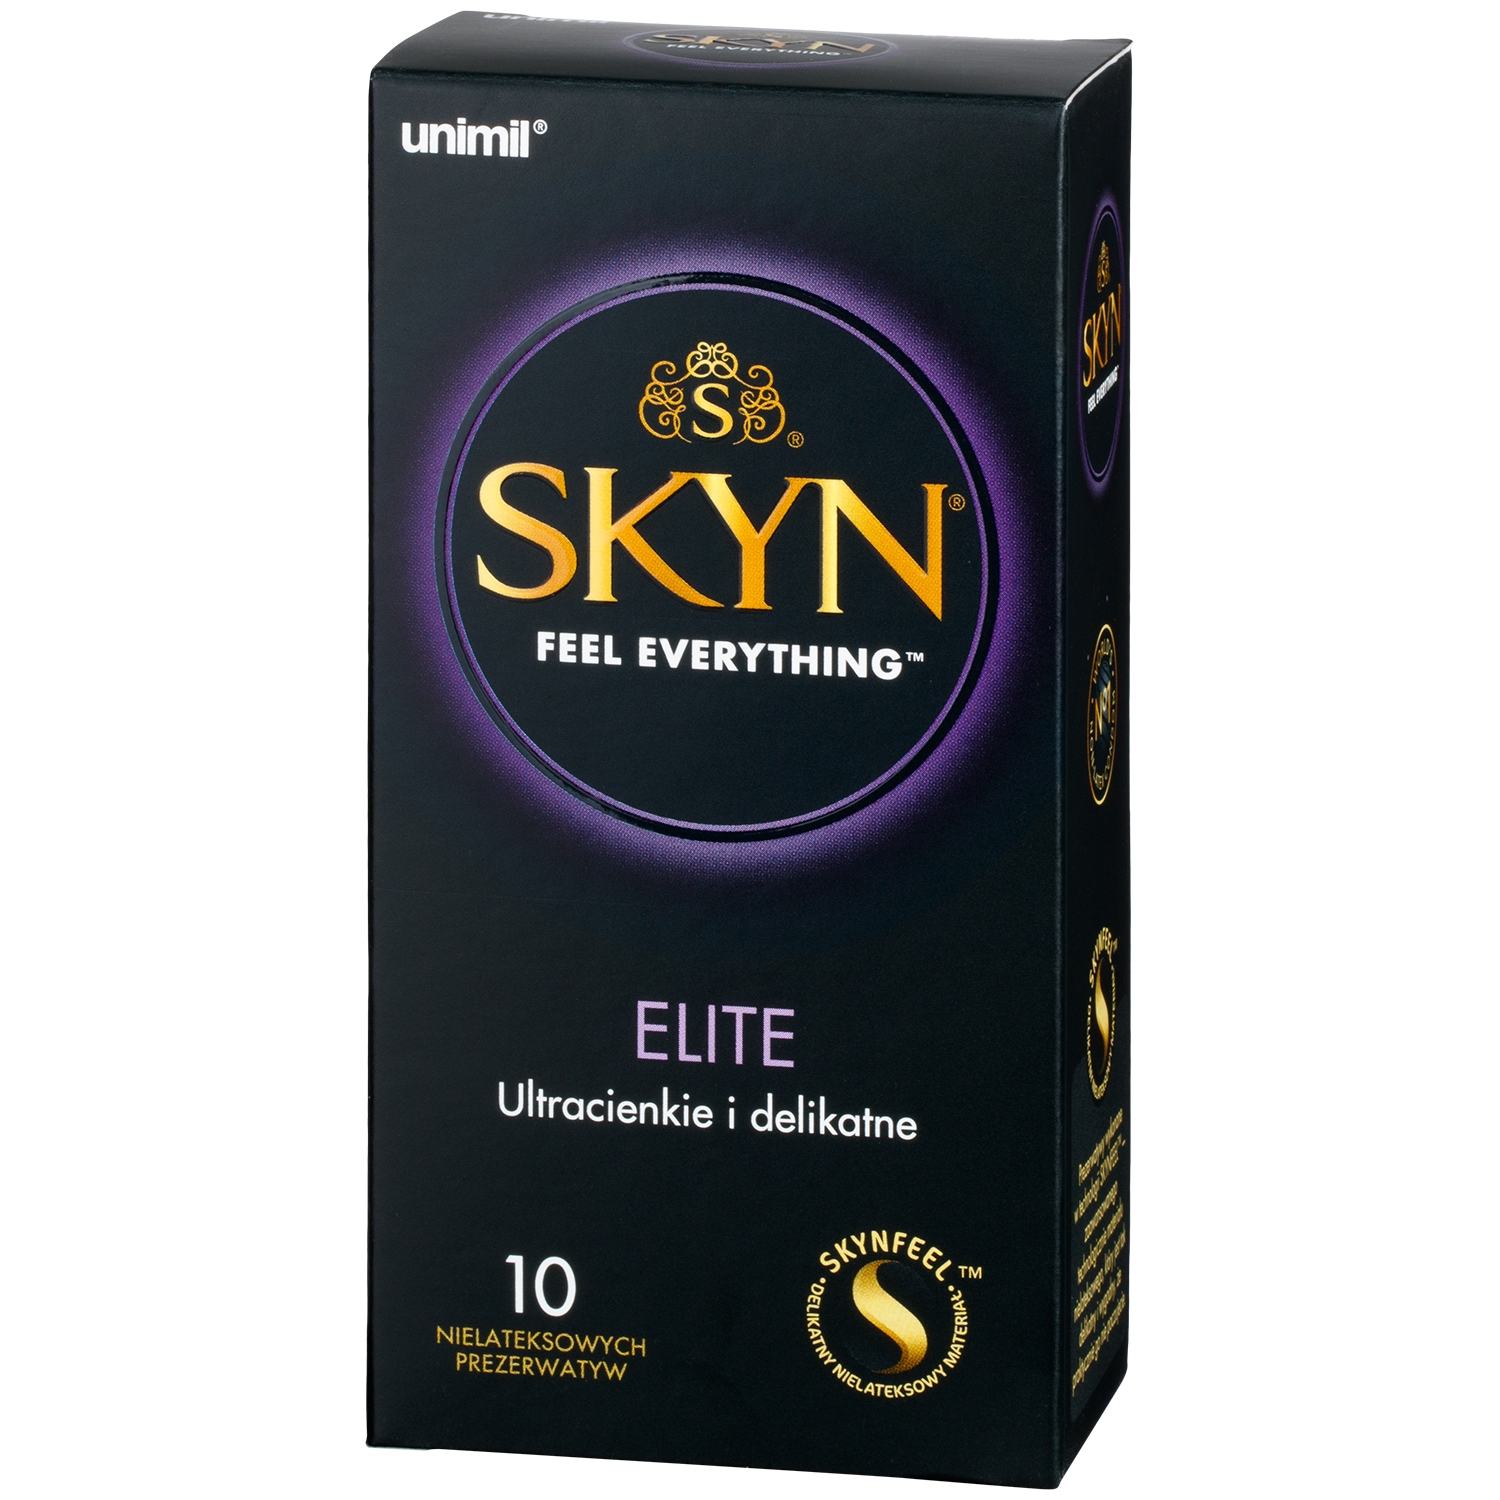 SKYN Elite Latexfria Kondomer 10 st - Klar